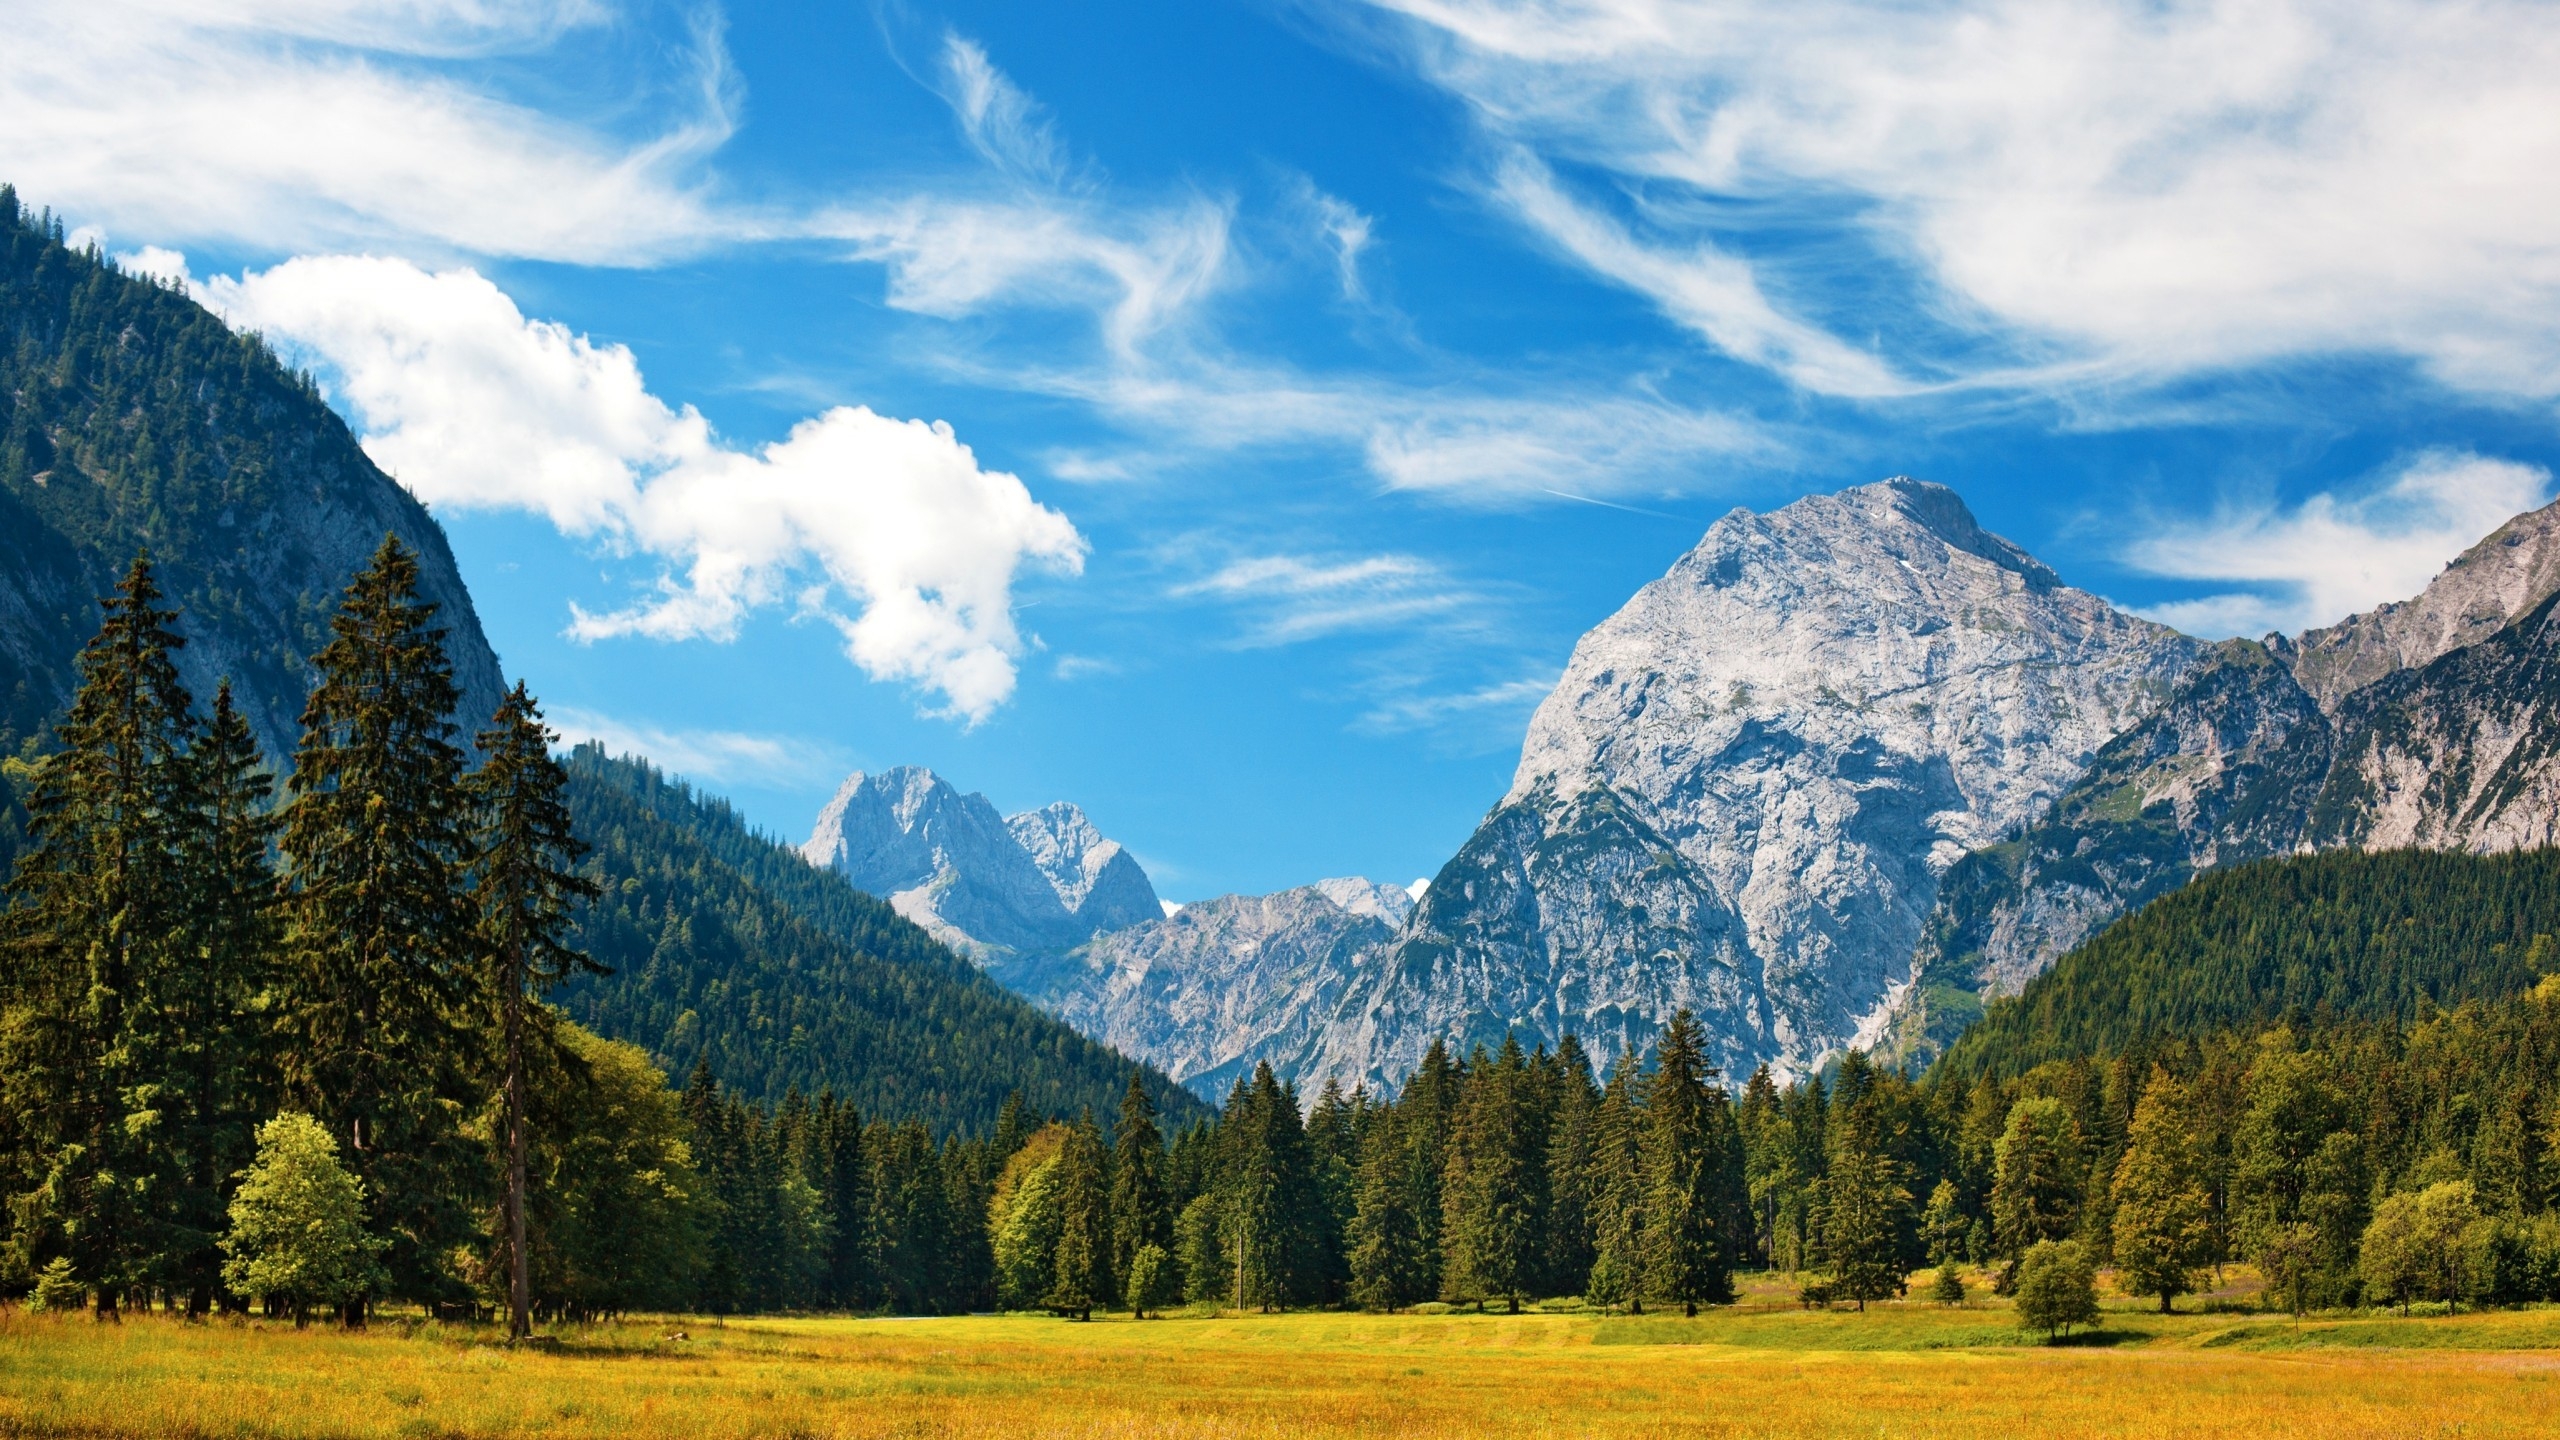 Stunning Mountain Landscape for 2560x1440 HDTV resolution